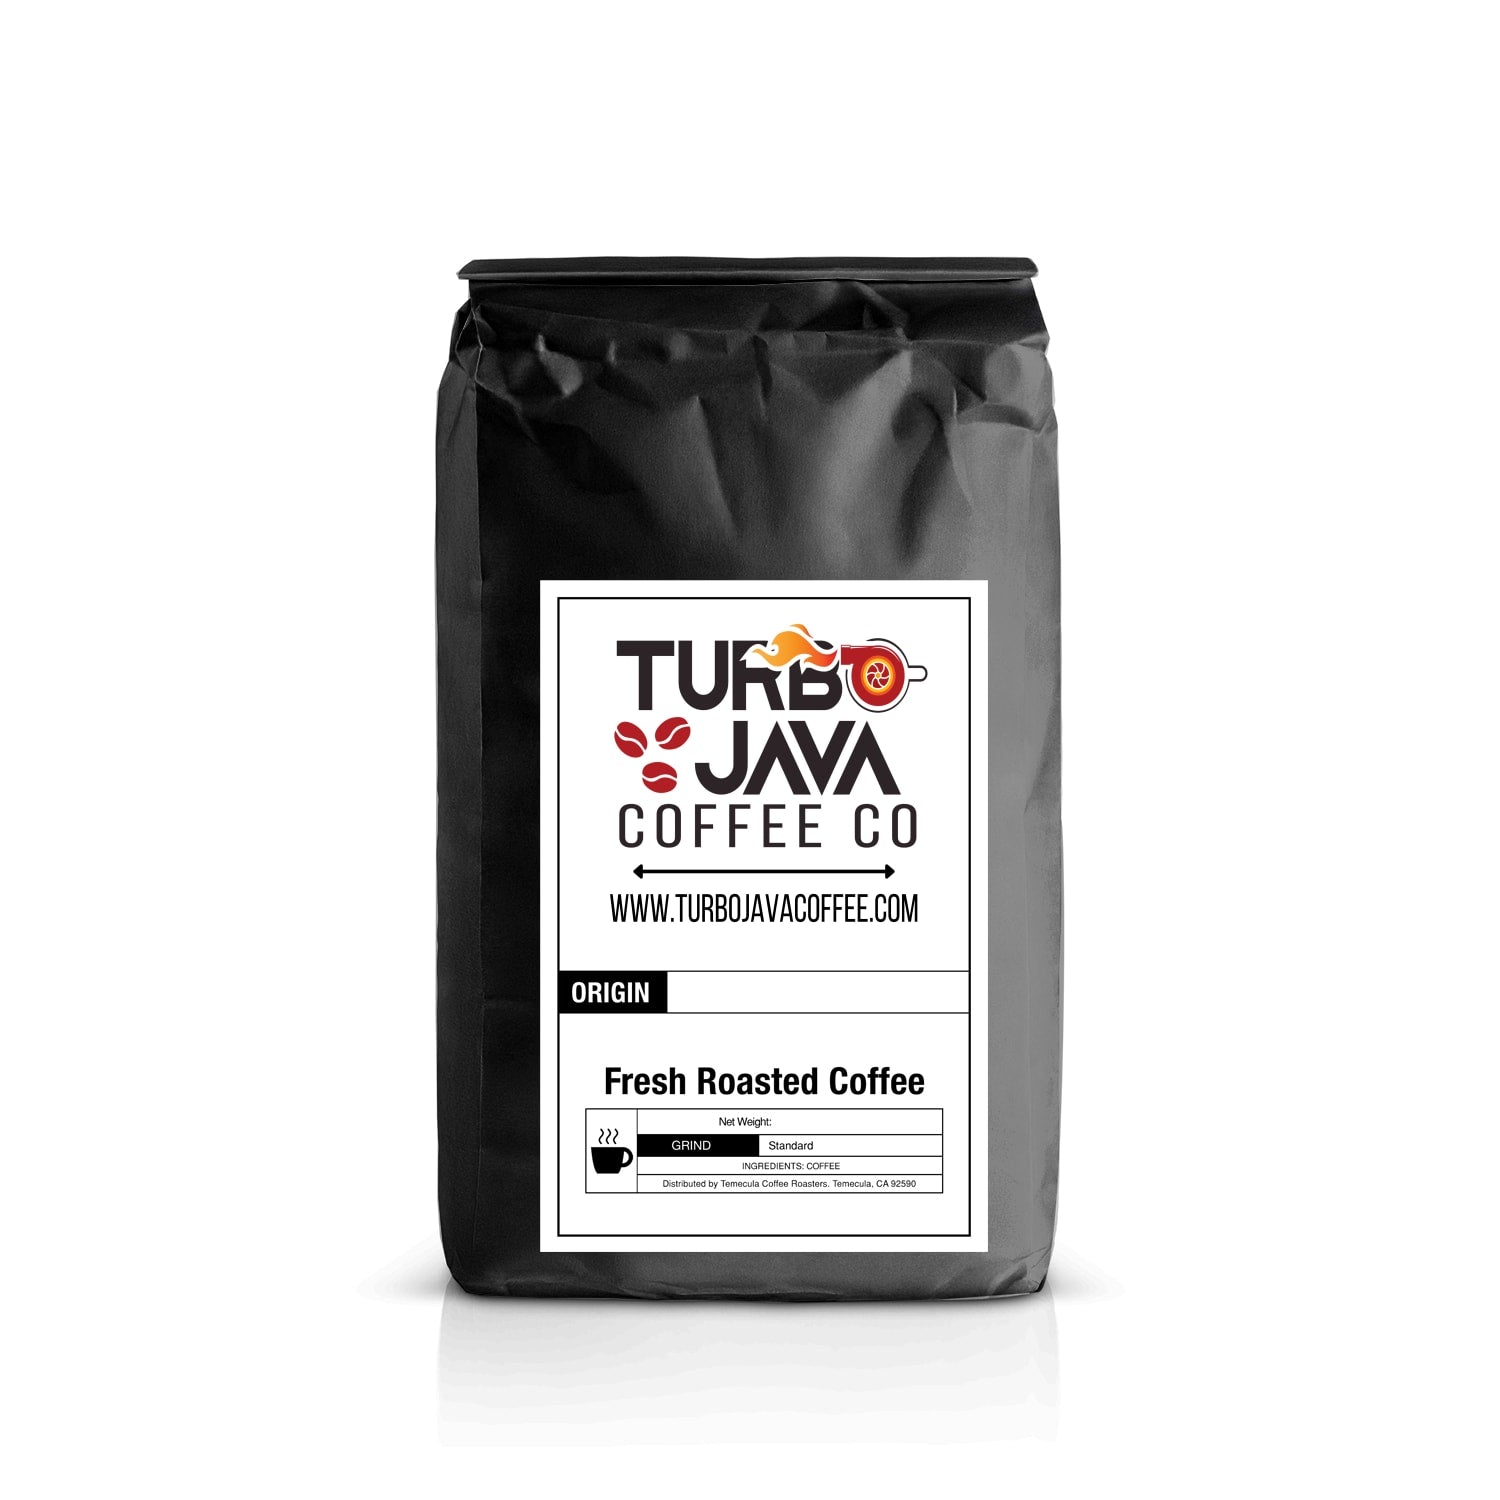 Turbo Java Coffee Co. Mint Coffee 12 oz / Standard,12 oz / Coarse,12 oz / Espresso,12 oz / Whole Bean,1 lb / Standard,1 lb / Coarse,1 lb / Espresso,1 lb / Whole Bean,2 lb / Standard,2 lb / Coarse,2 lb / Espresso,2 lb / Whole Bean,5 lb / Standard,5 lb / Coarse,5 lb / Espresso,5 lb / Whole Bean,12 lb / Coarse